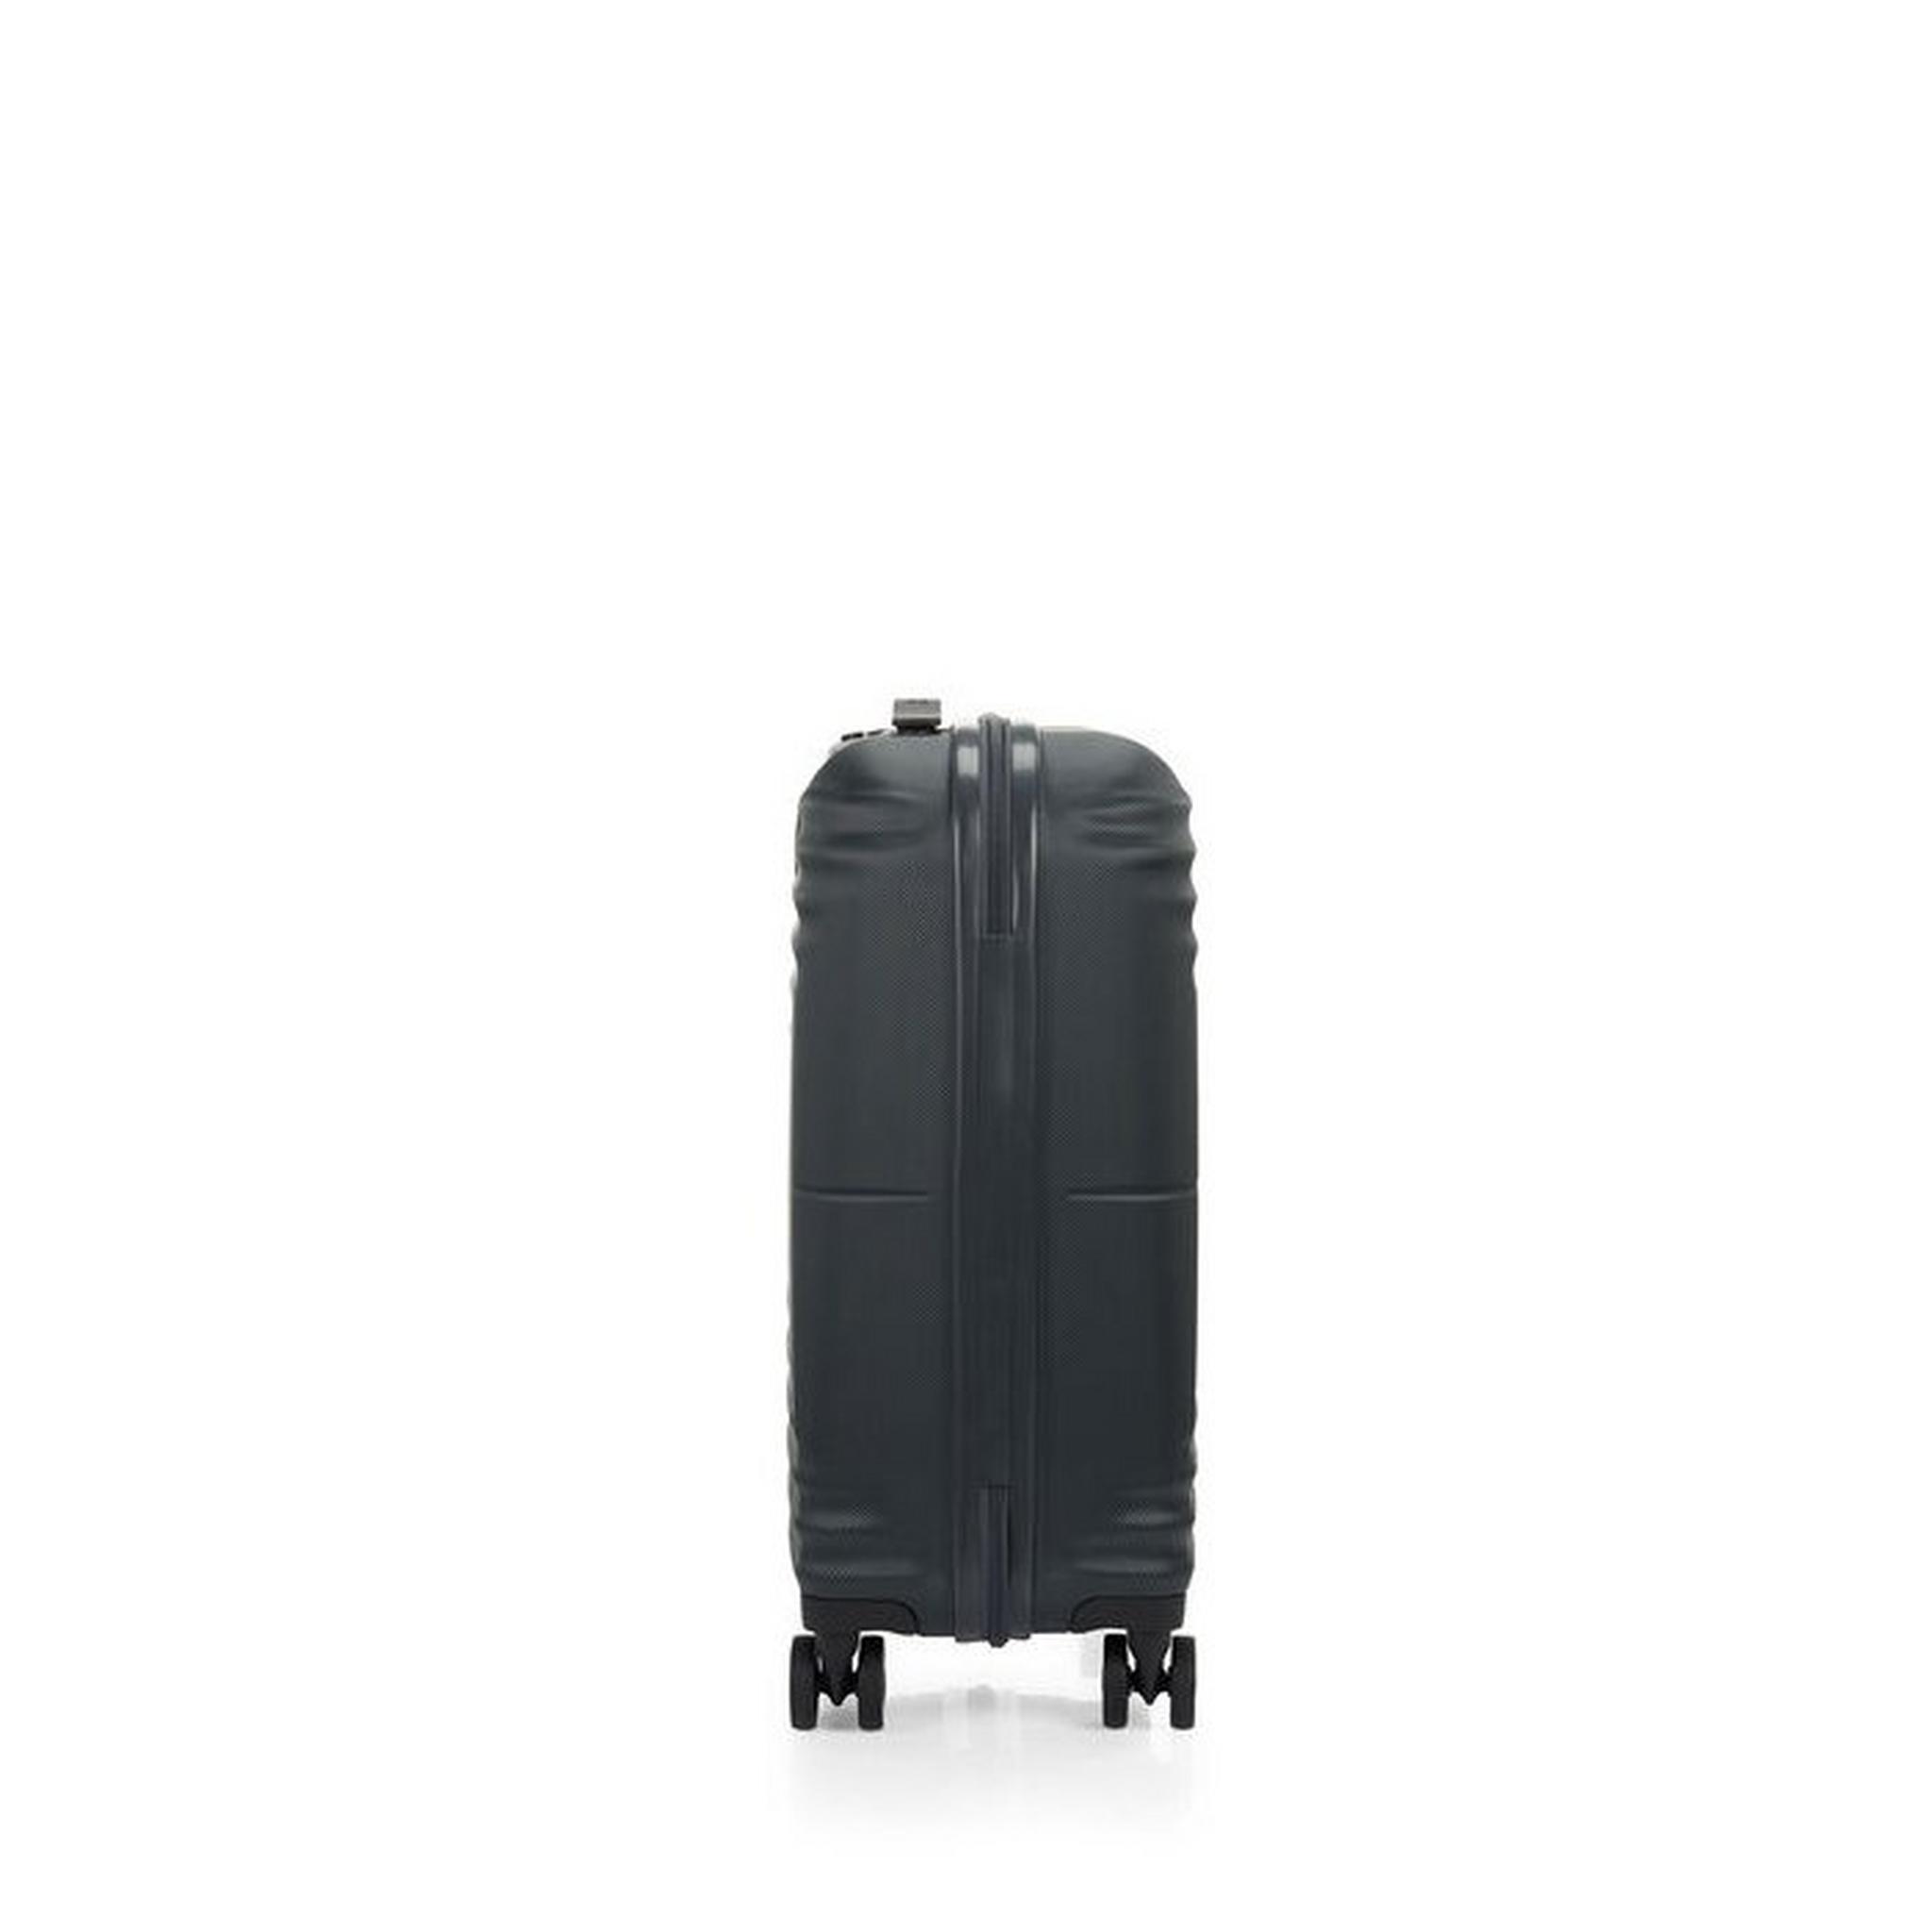 حقيبة سفر تويست ويفز بجوانب صلبة وعجلات دوارة 88سم، QC6X19009 - أسود